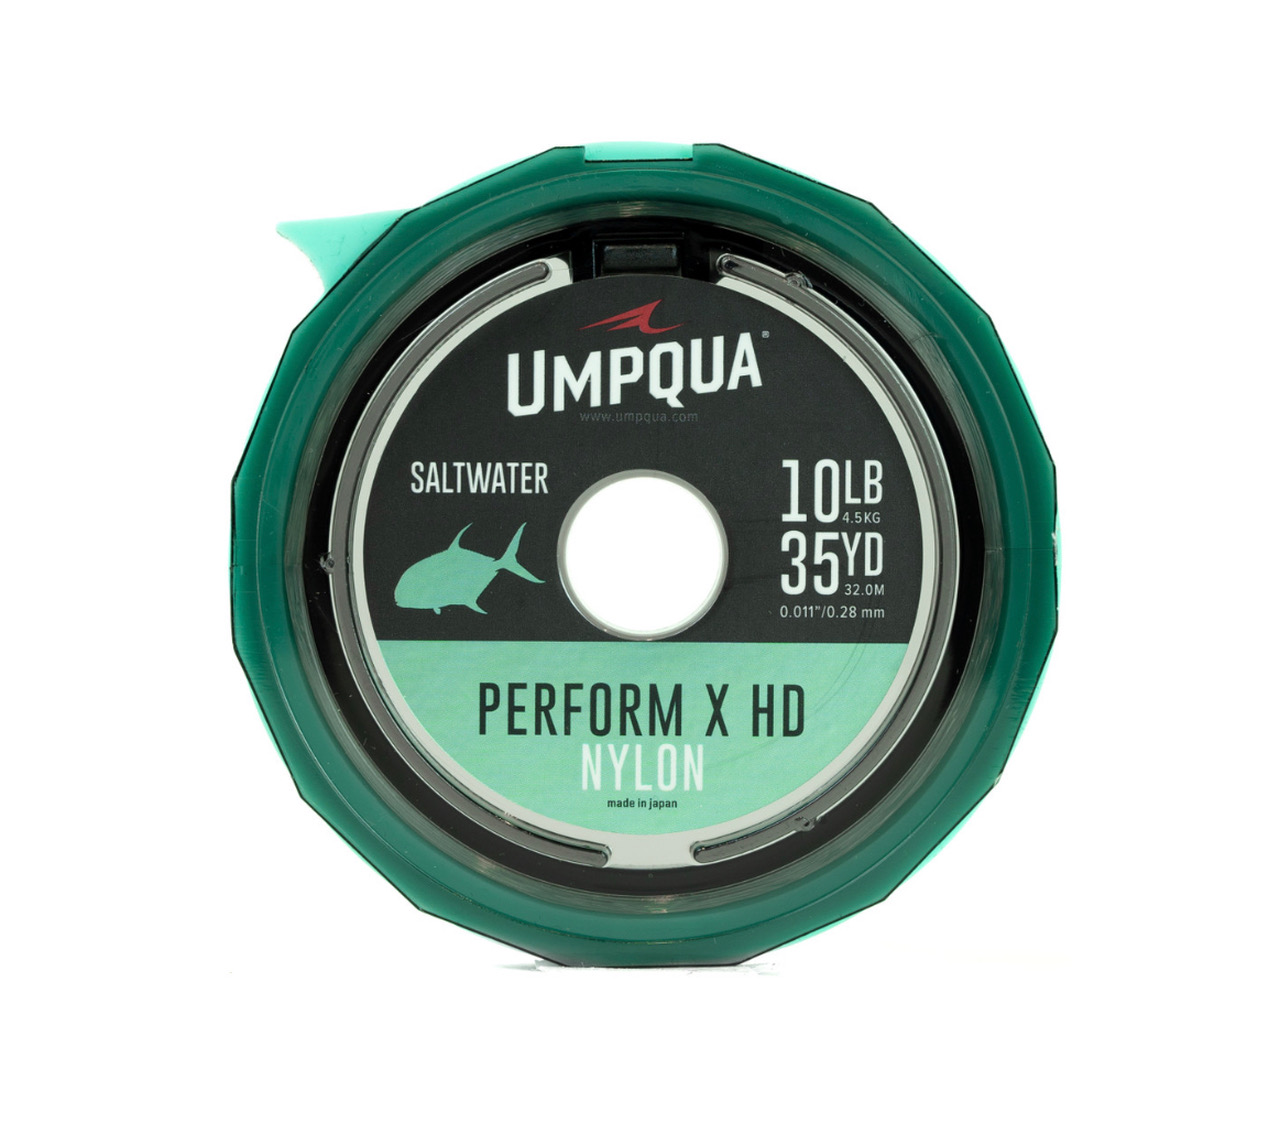 Umpqua Perform X HD Saltwater Nylon Tippet - 25yd - 30lb